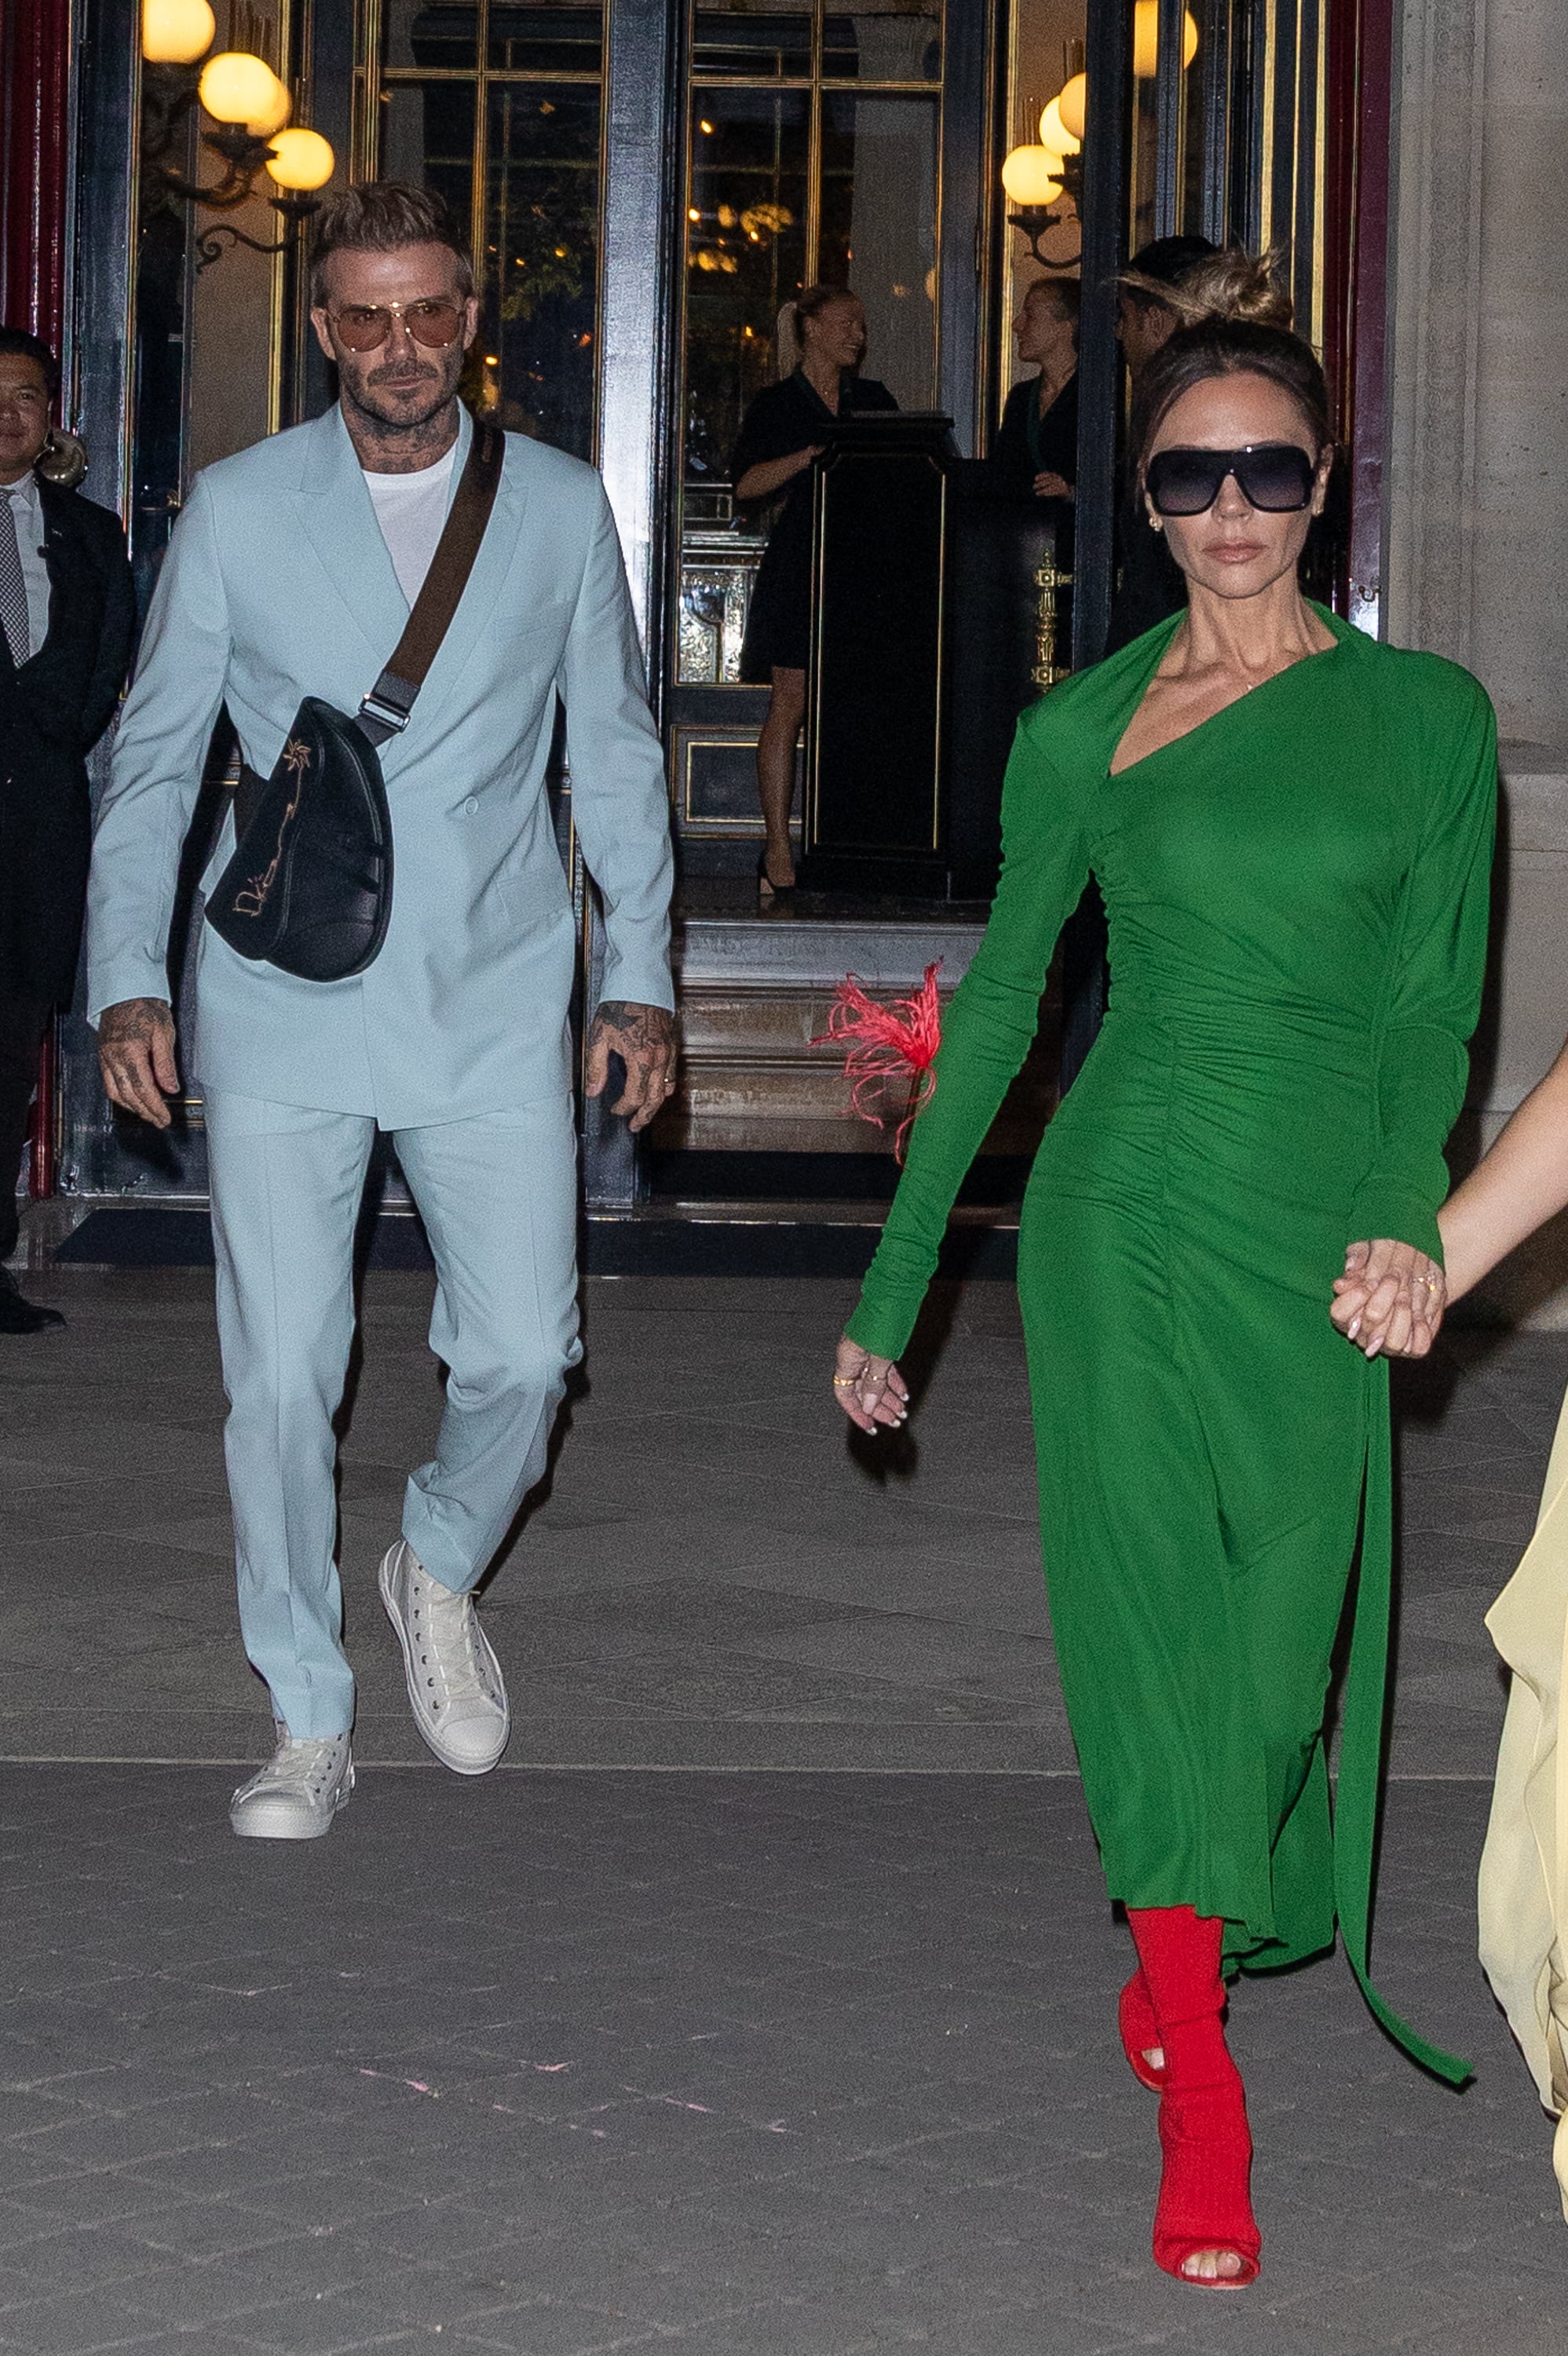 David Beckham's Louis Vuitton Travel Bag in 2023